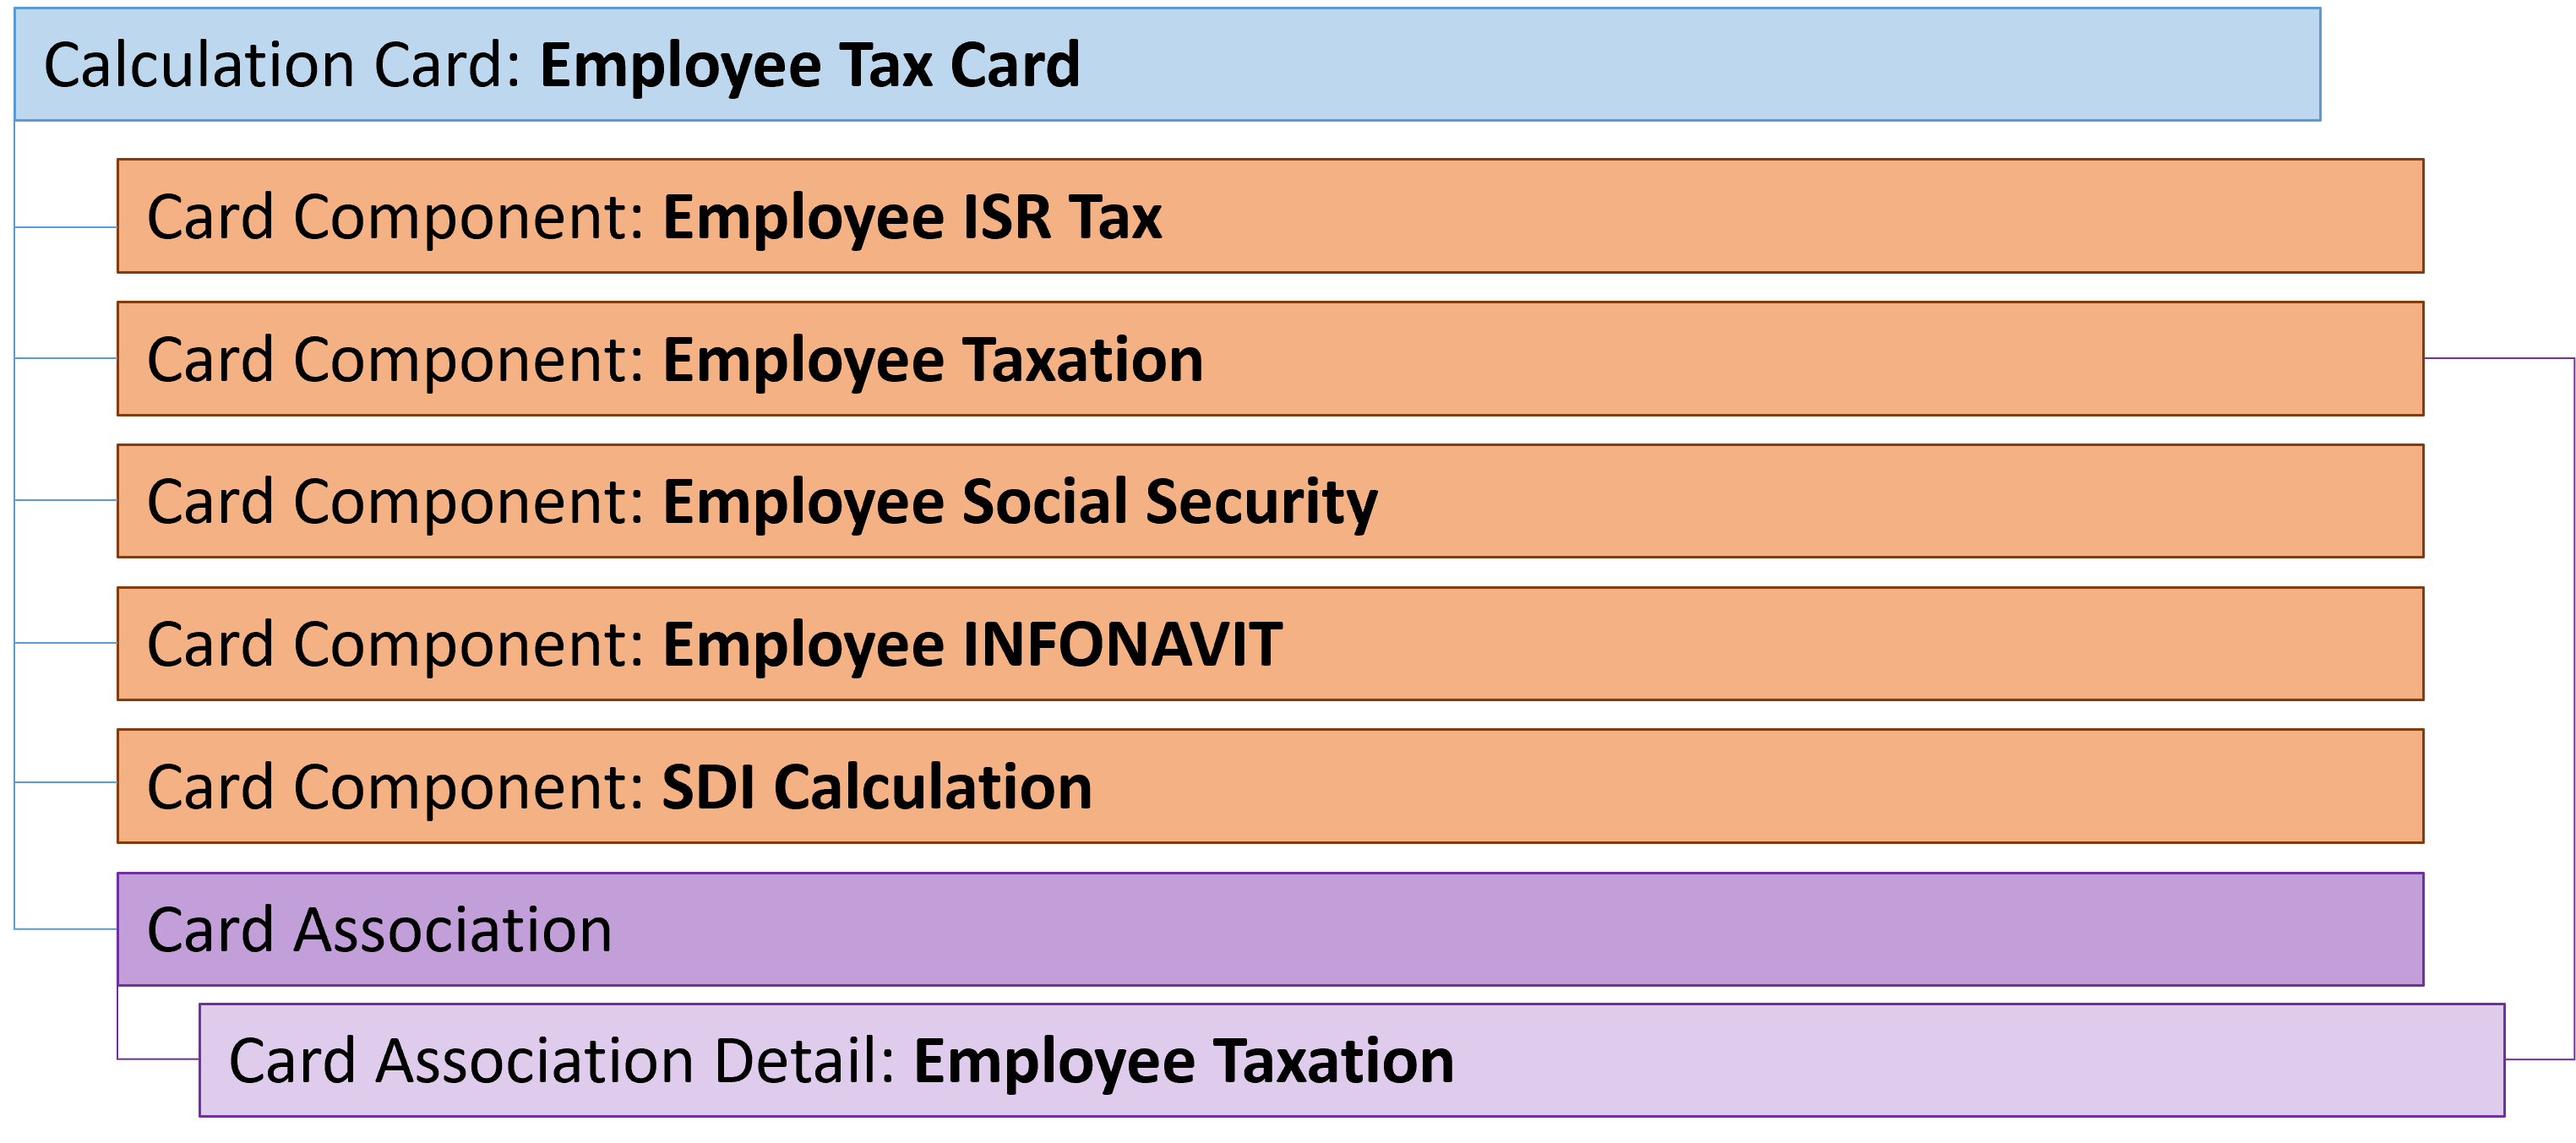 employee tax card calculation card